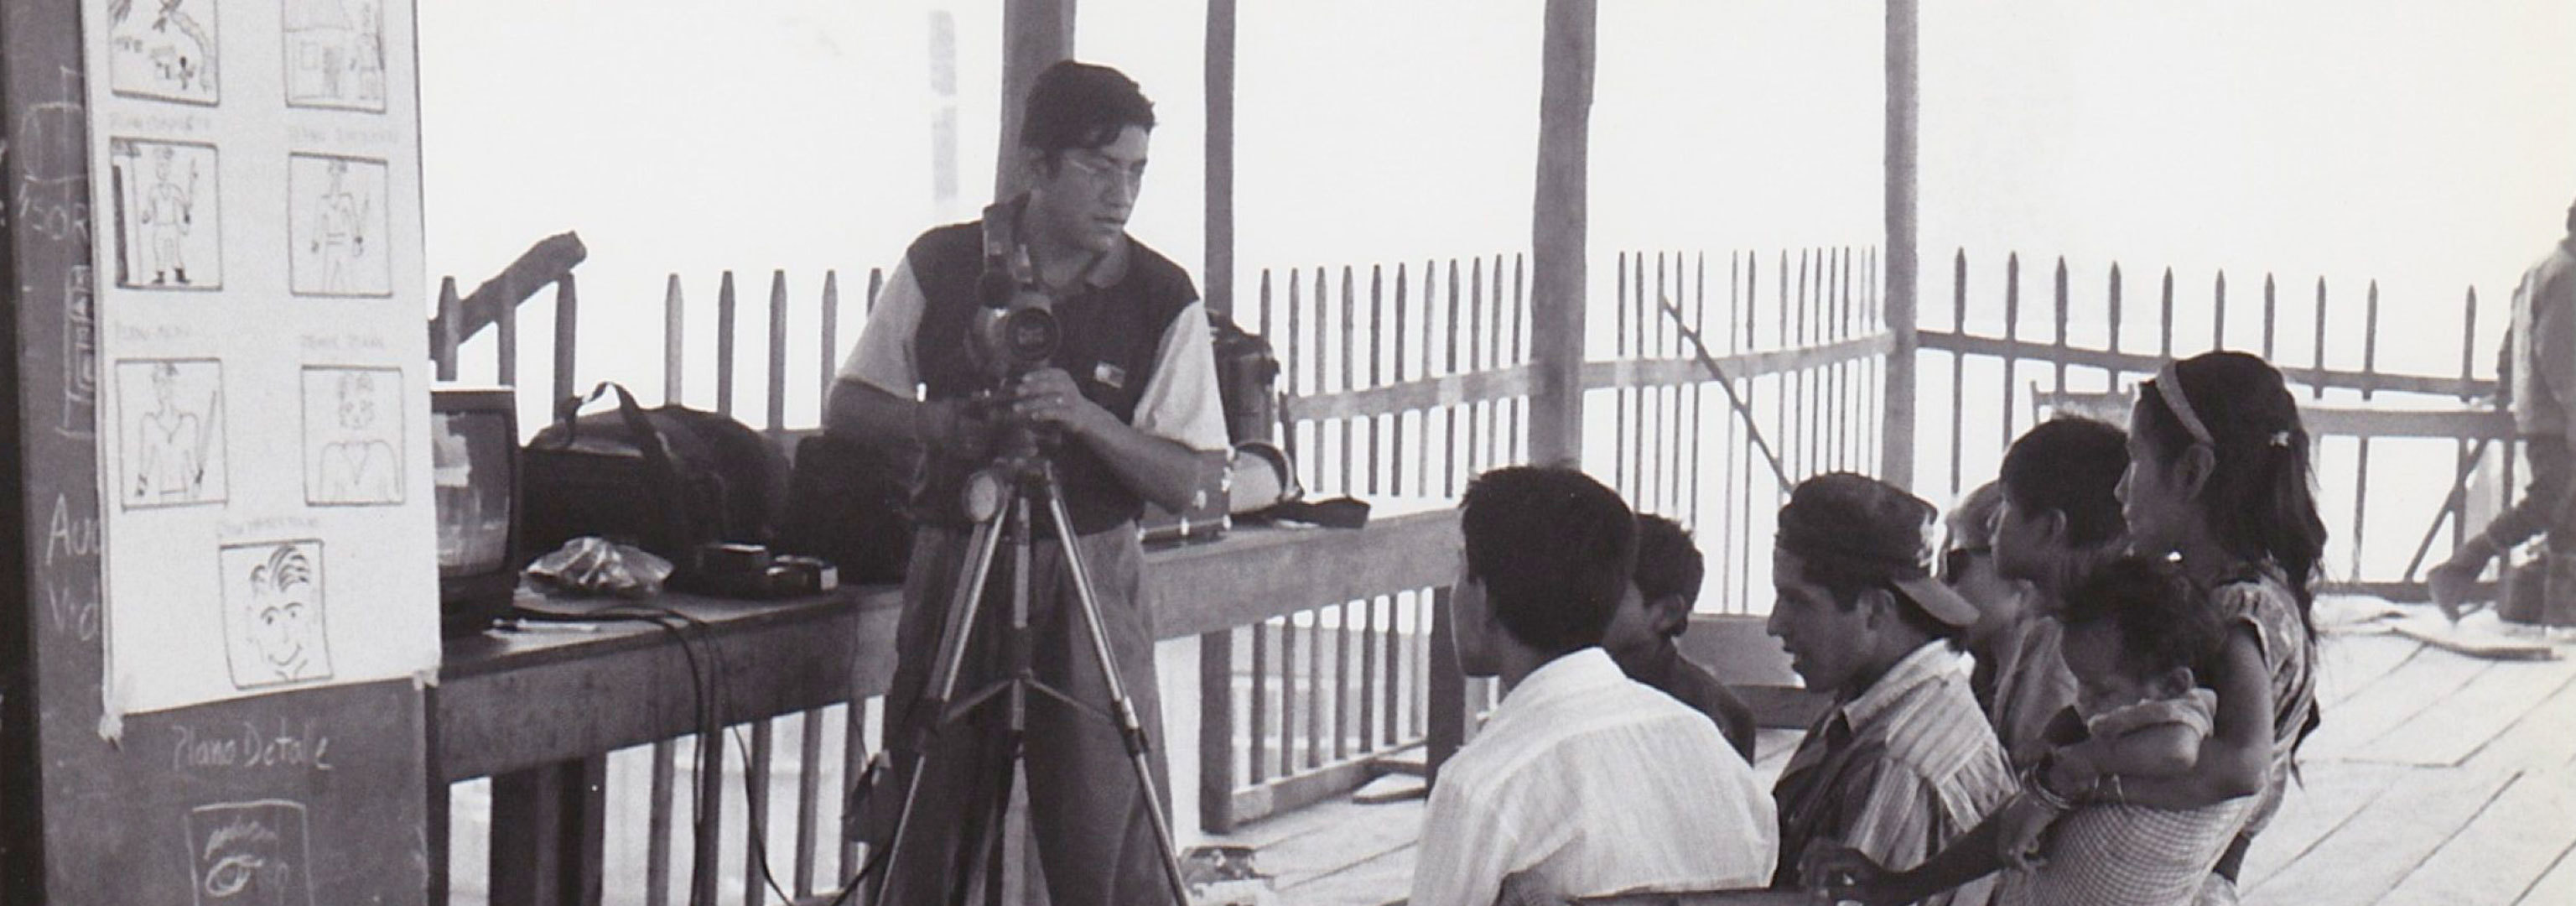 Workshop in Chiapas Mexico, 1998. Courtesy of Chiapas Media Project (CMP)/Promedios archive.